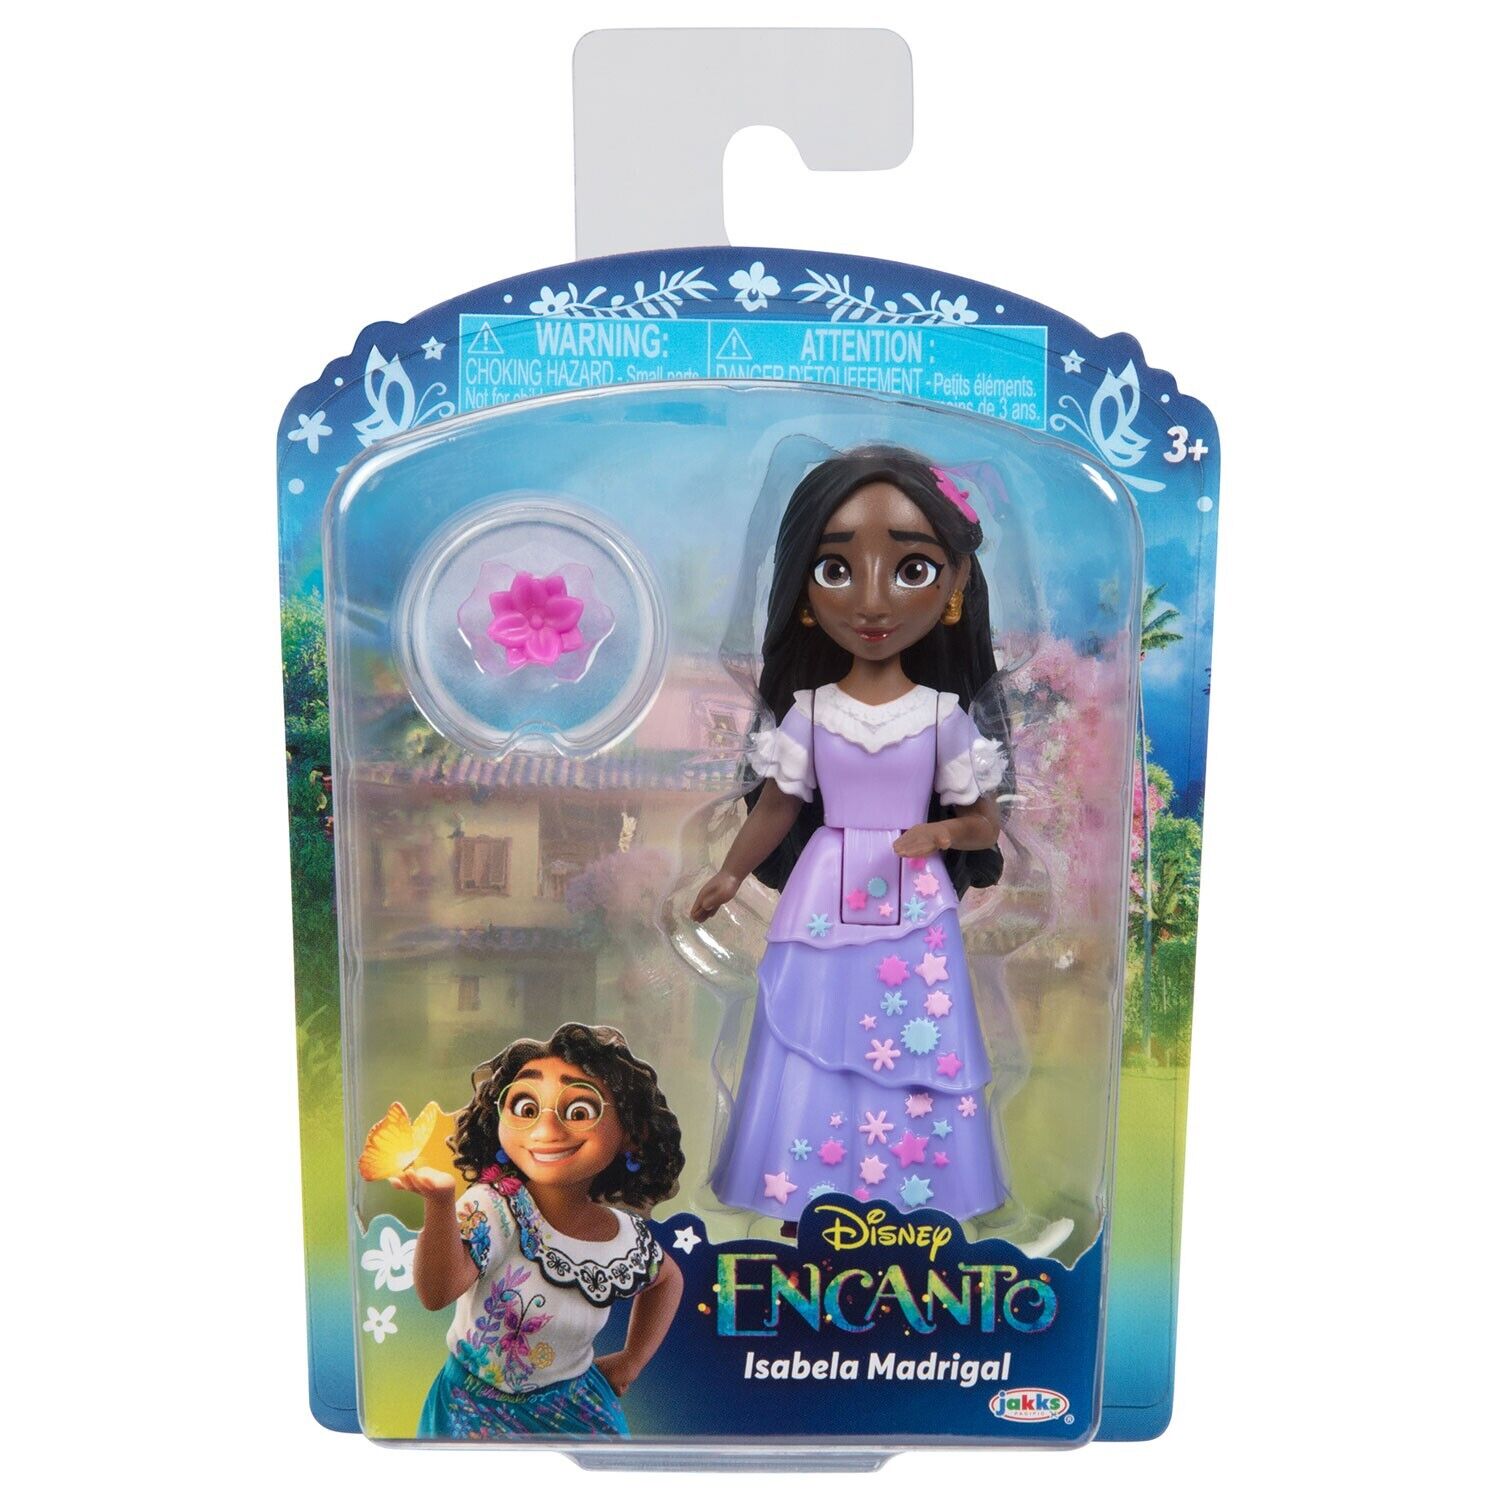 "Disney Encanto Isabela Madrigal 3" Small Doll - Brand New"